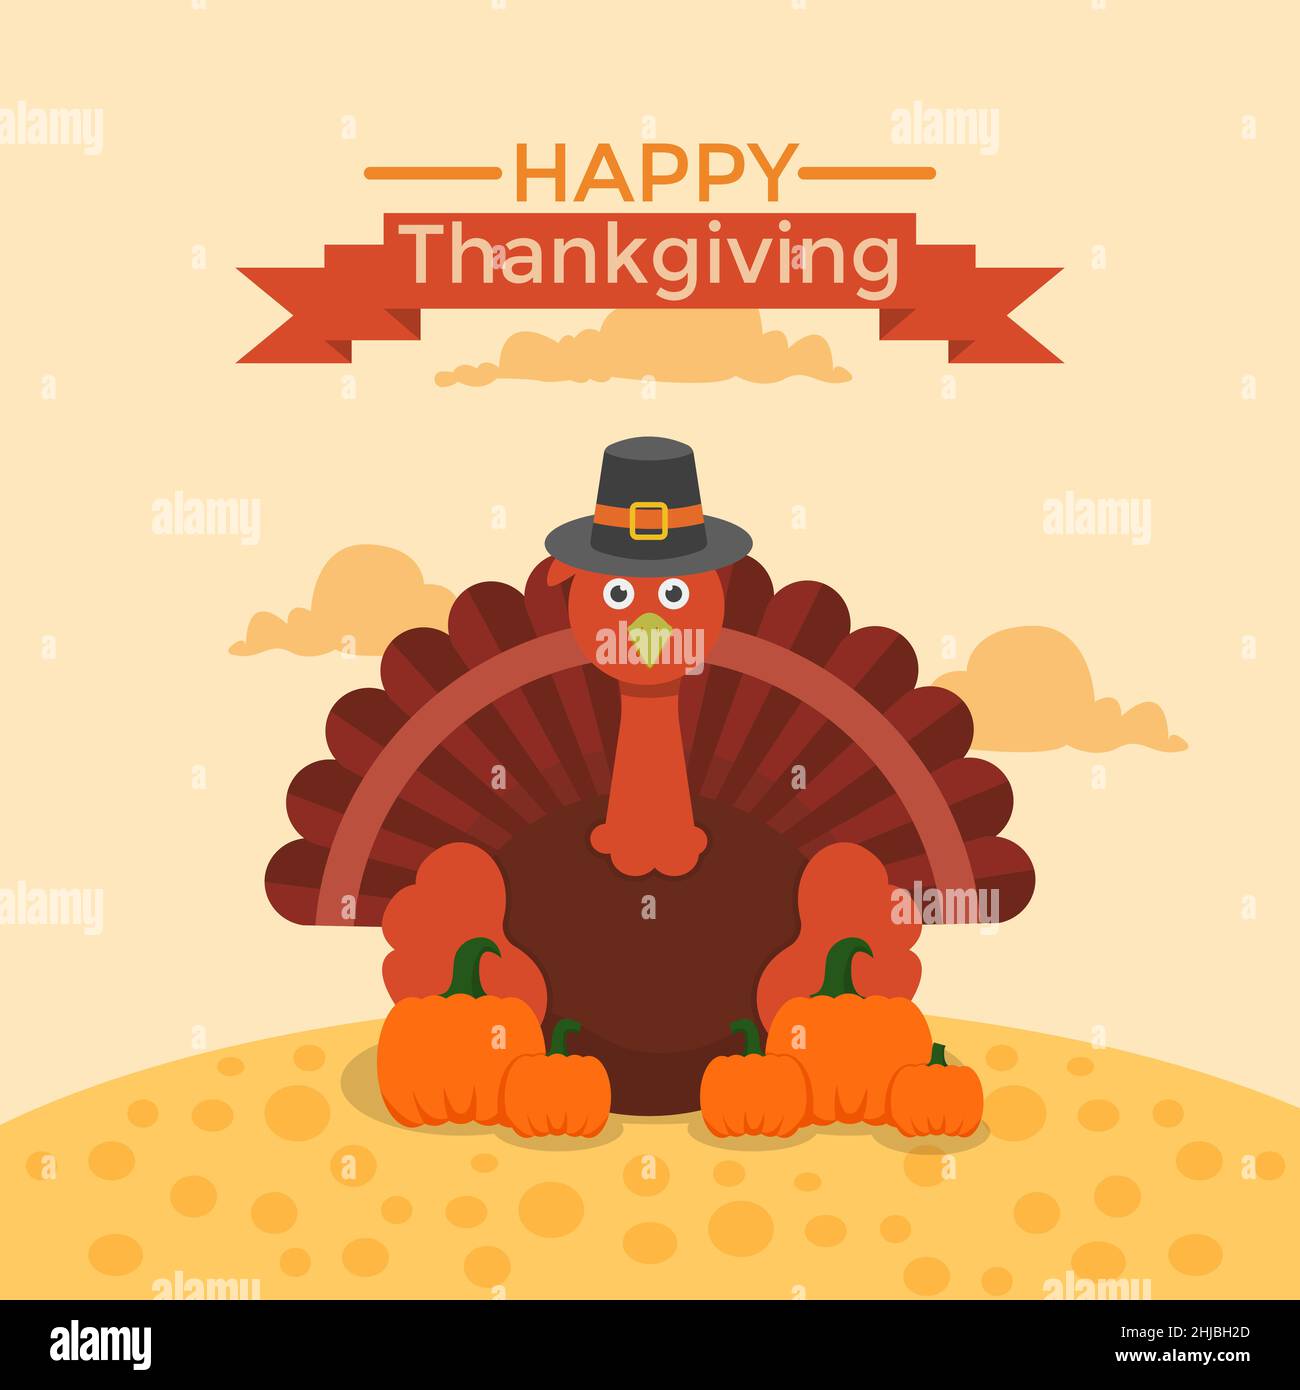 Vector Illustration of a Happy Thanksgiving greeting design with Celebration Design Cartoon Turkey Stock Vector